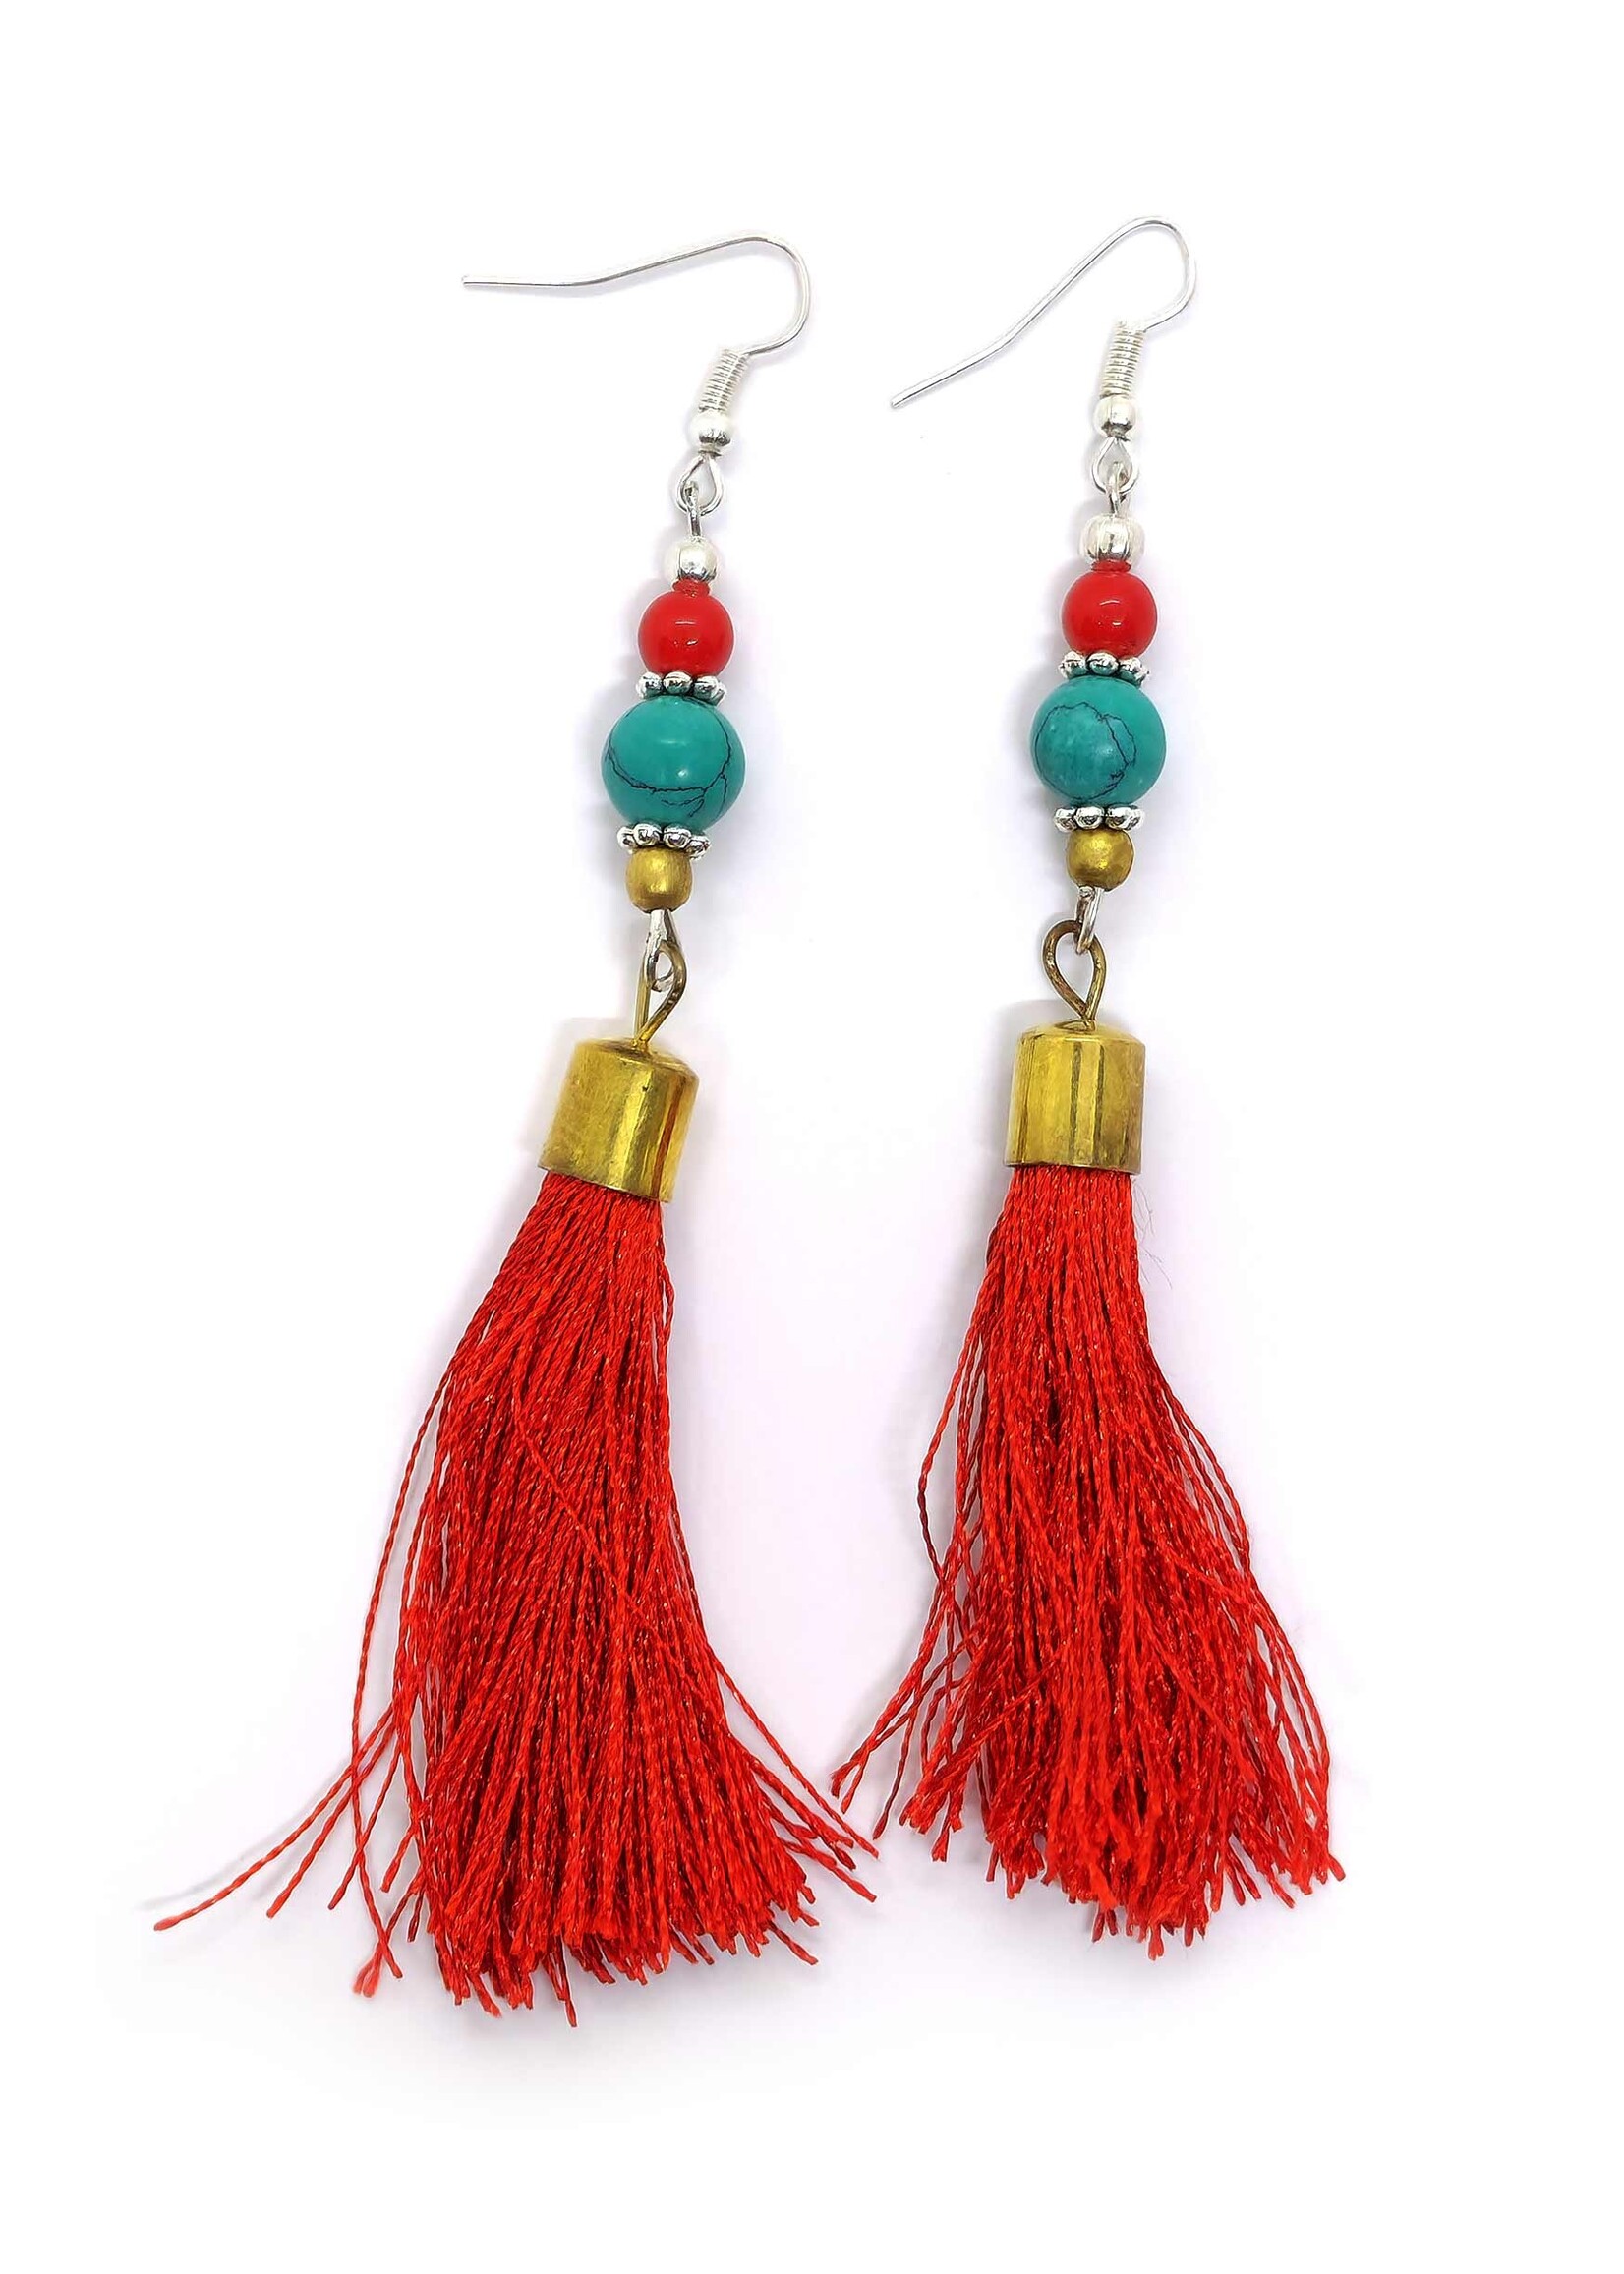 Handmade Tibetan Earrings Turquoise, Coral, and Silk Tassel